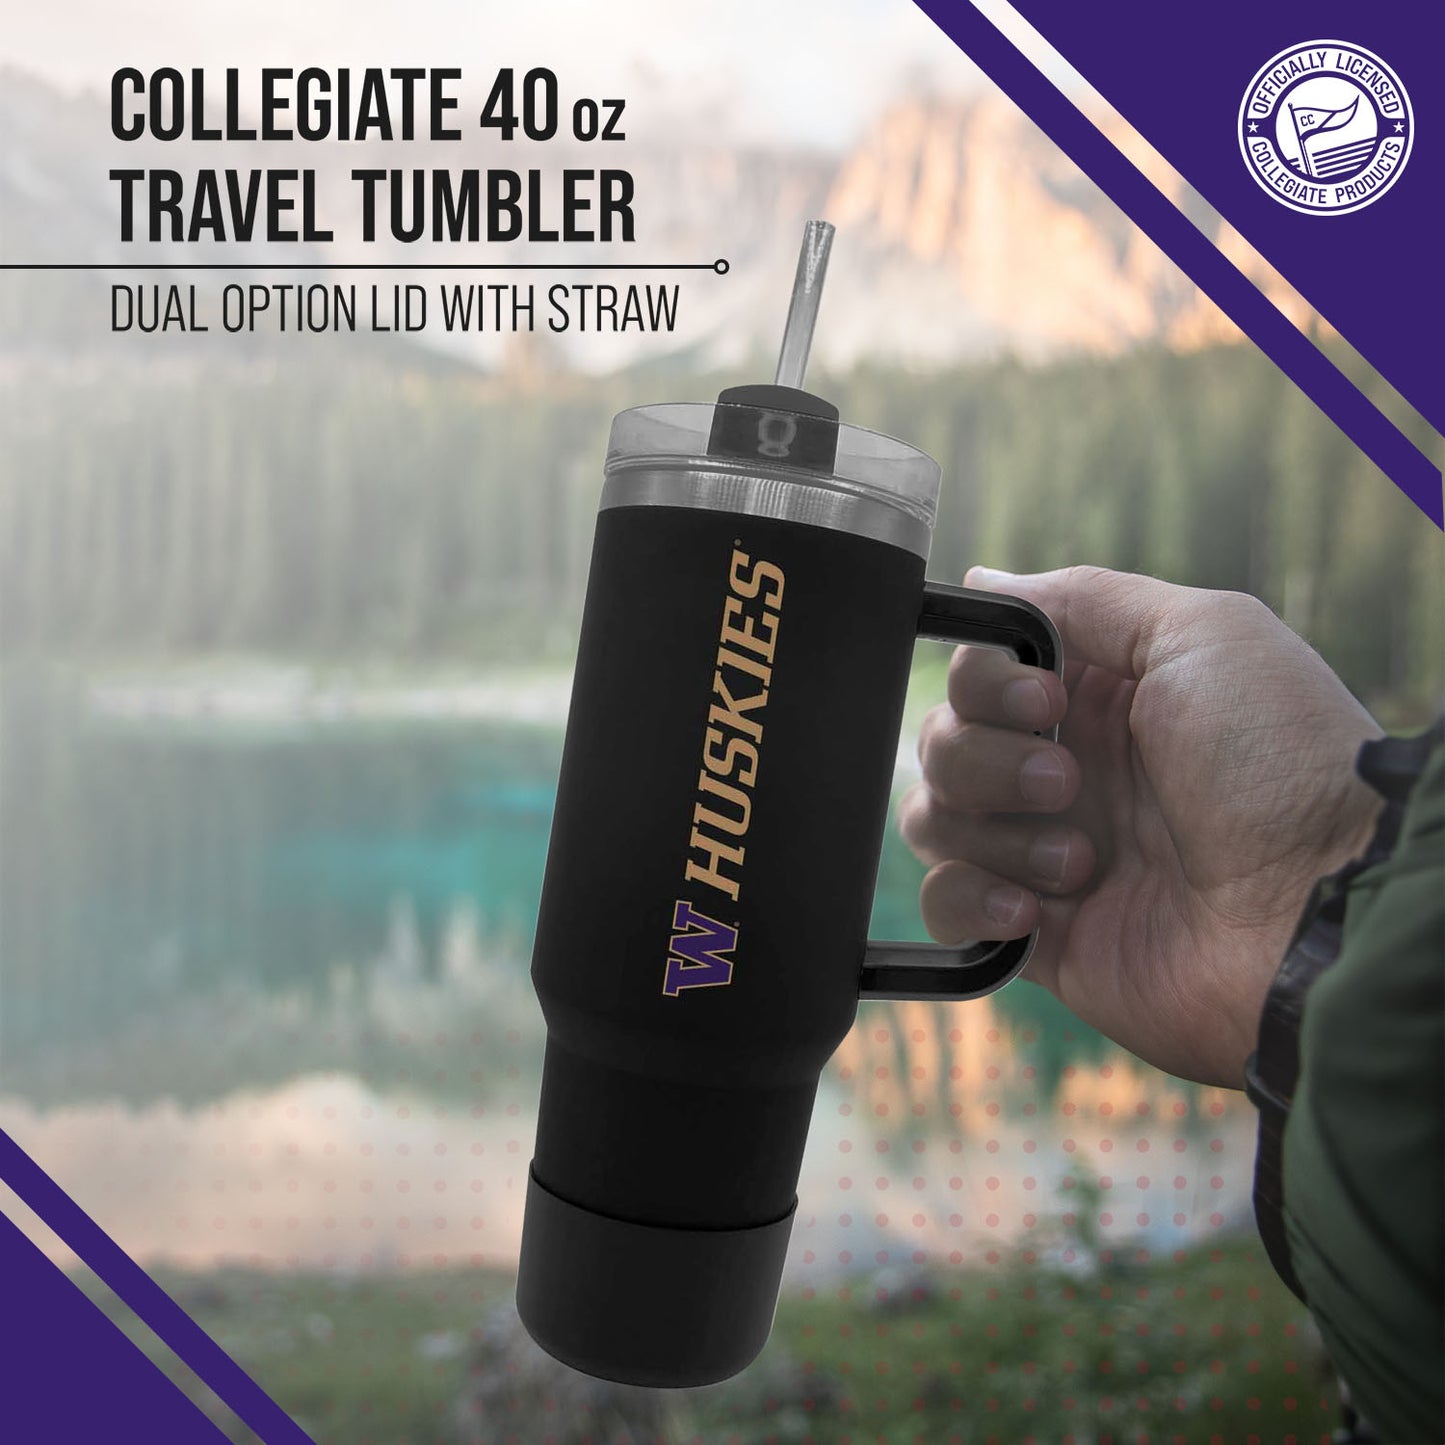 Washington Huskies College & University 40 oz Travel Tumbler With Handle - Black